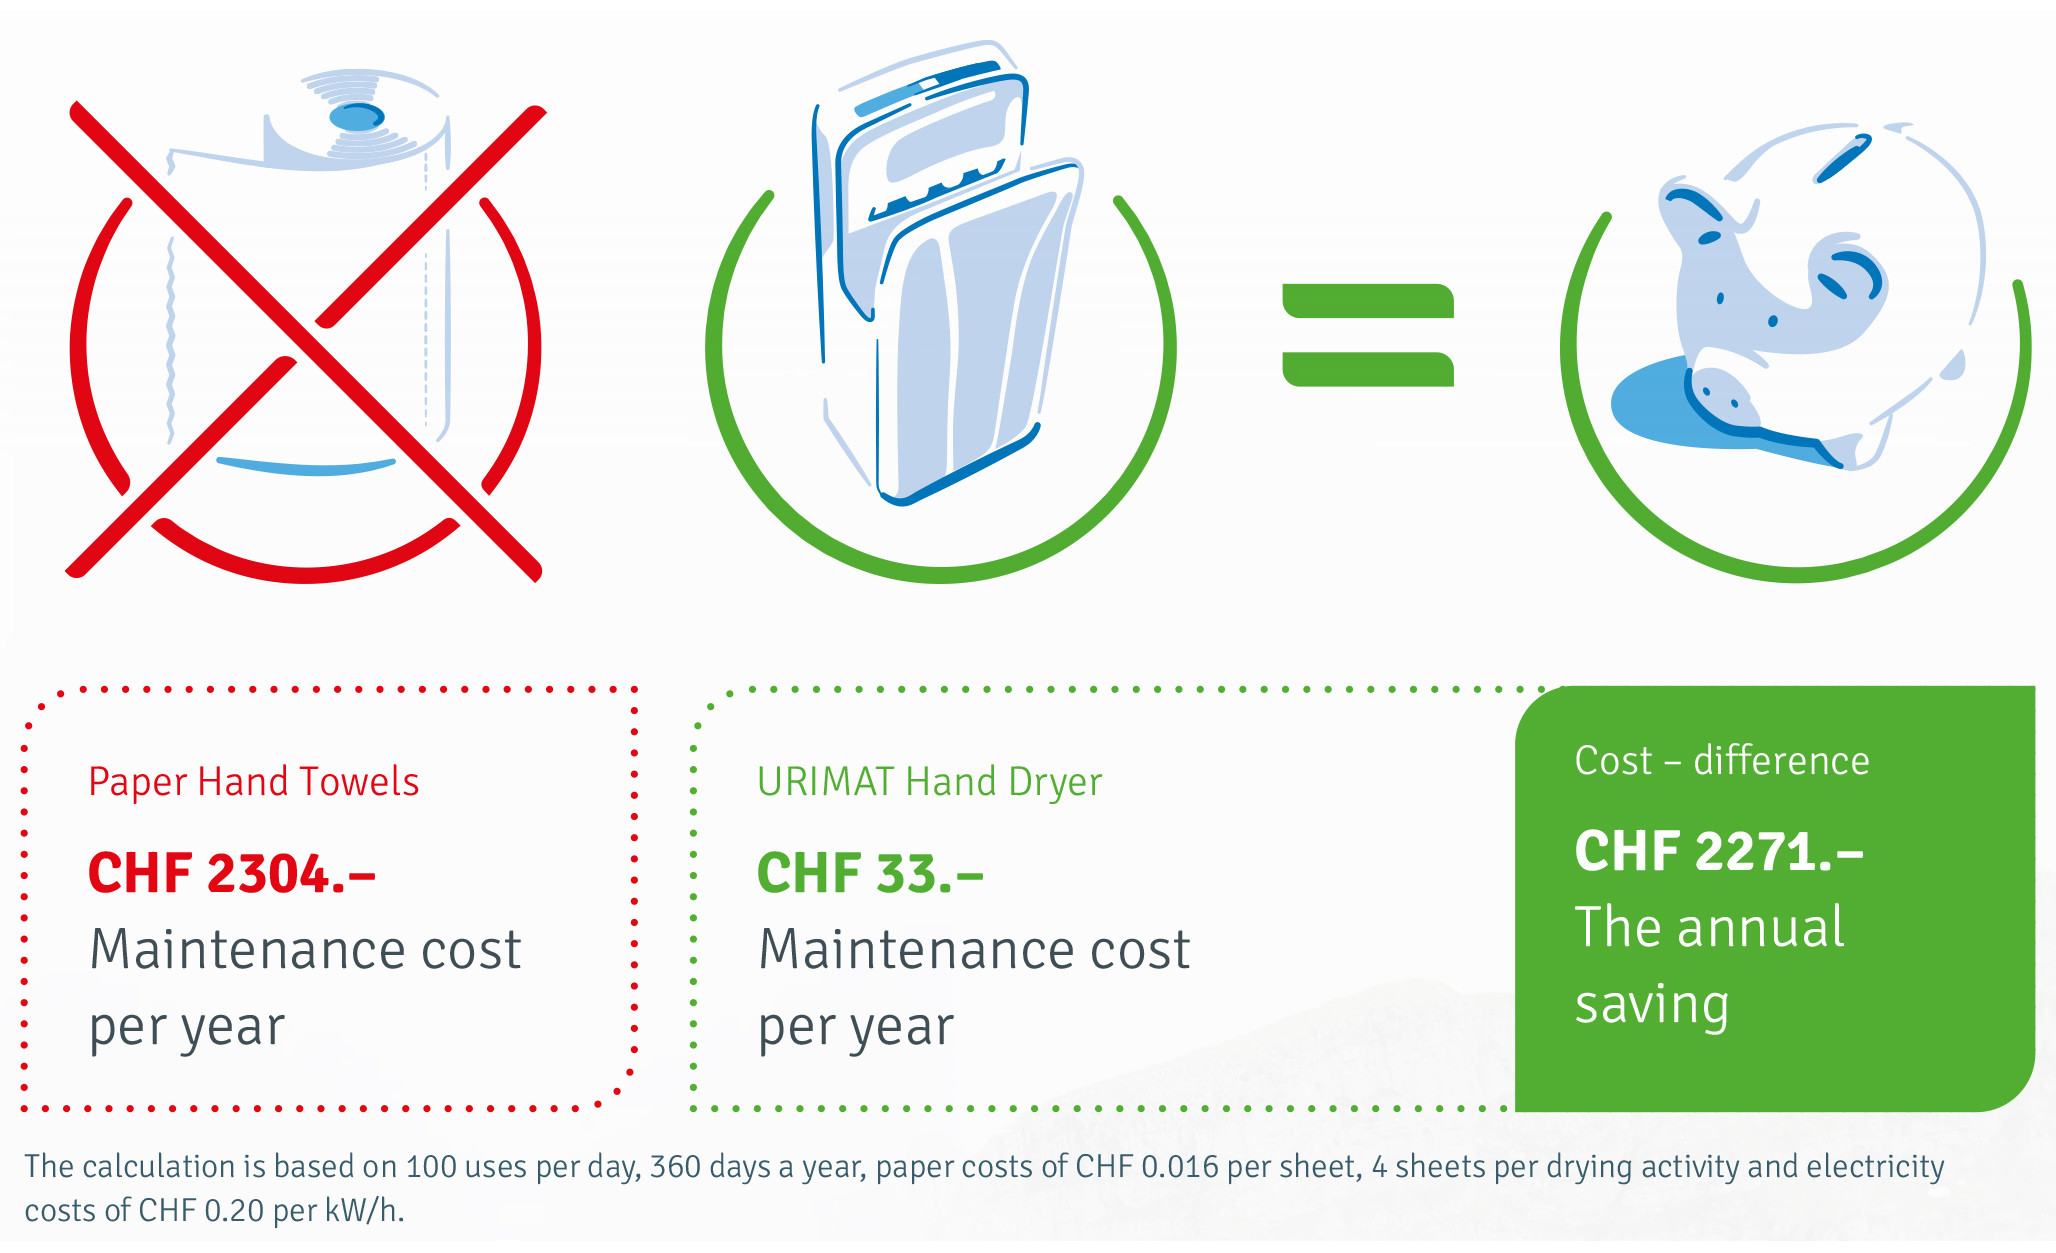 Cost comparison of hand dryers versus paper